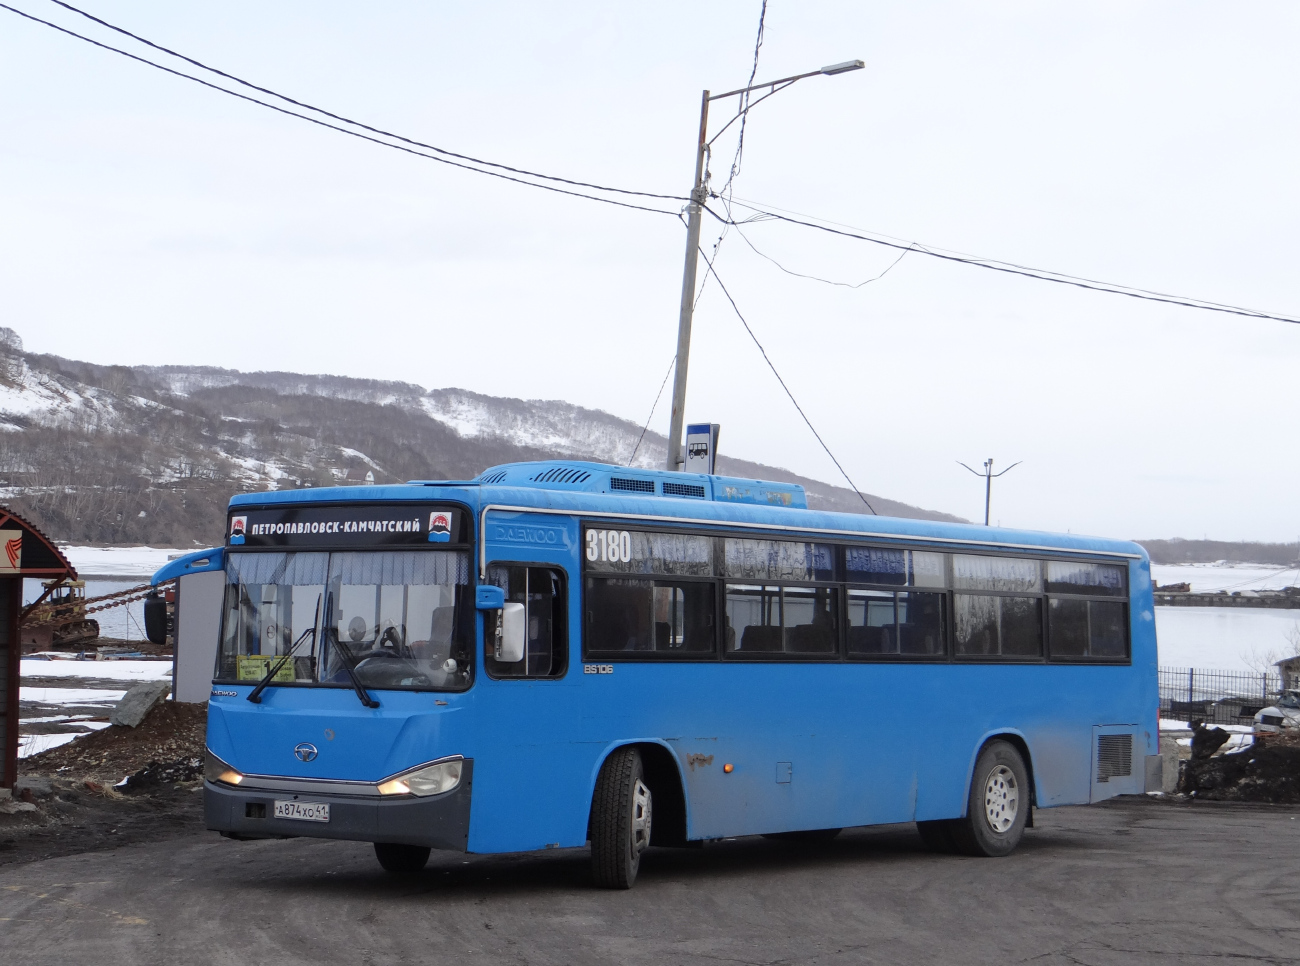 Petropavlovsk-Kamchatskiy, Daewoo BS106 # 3180